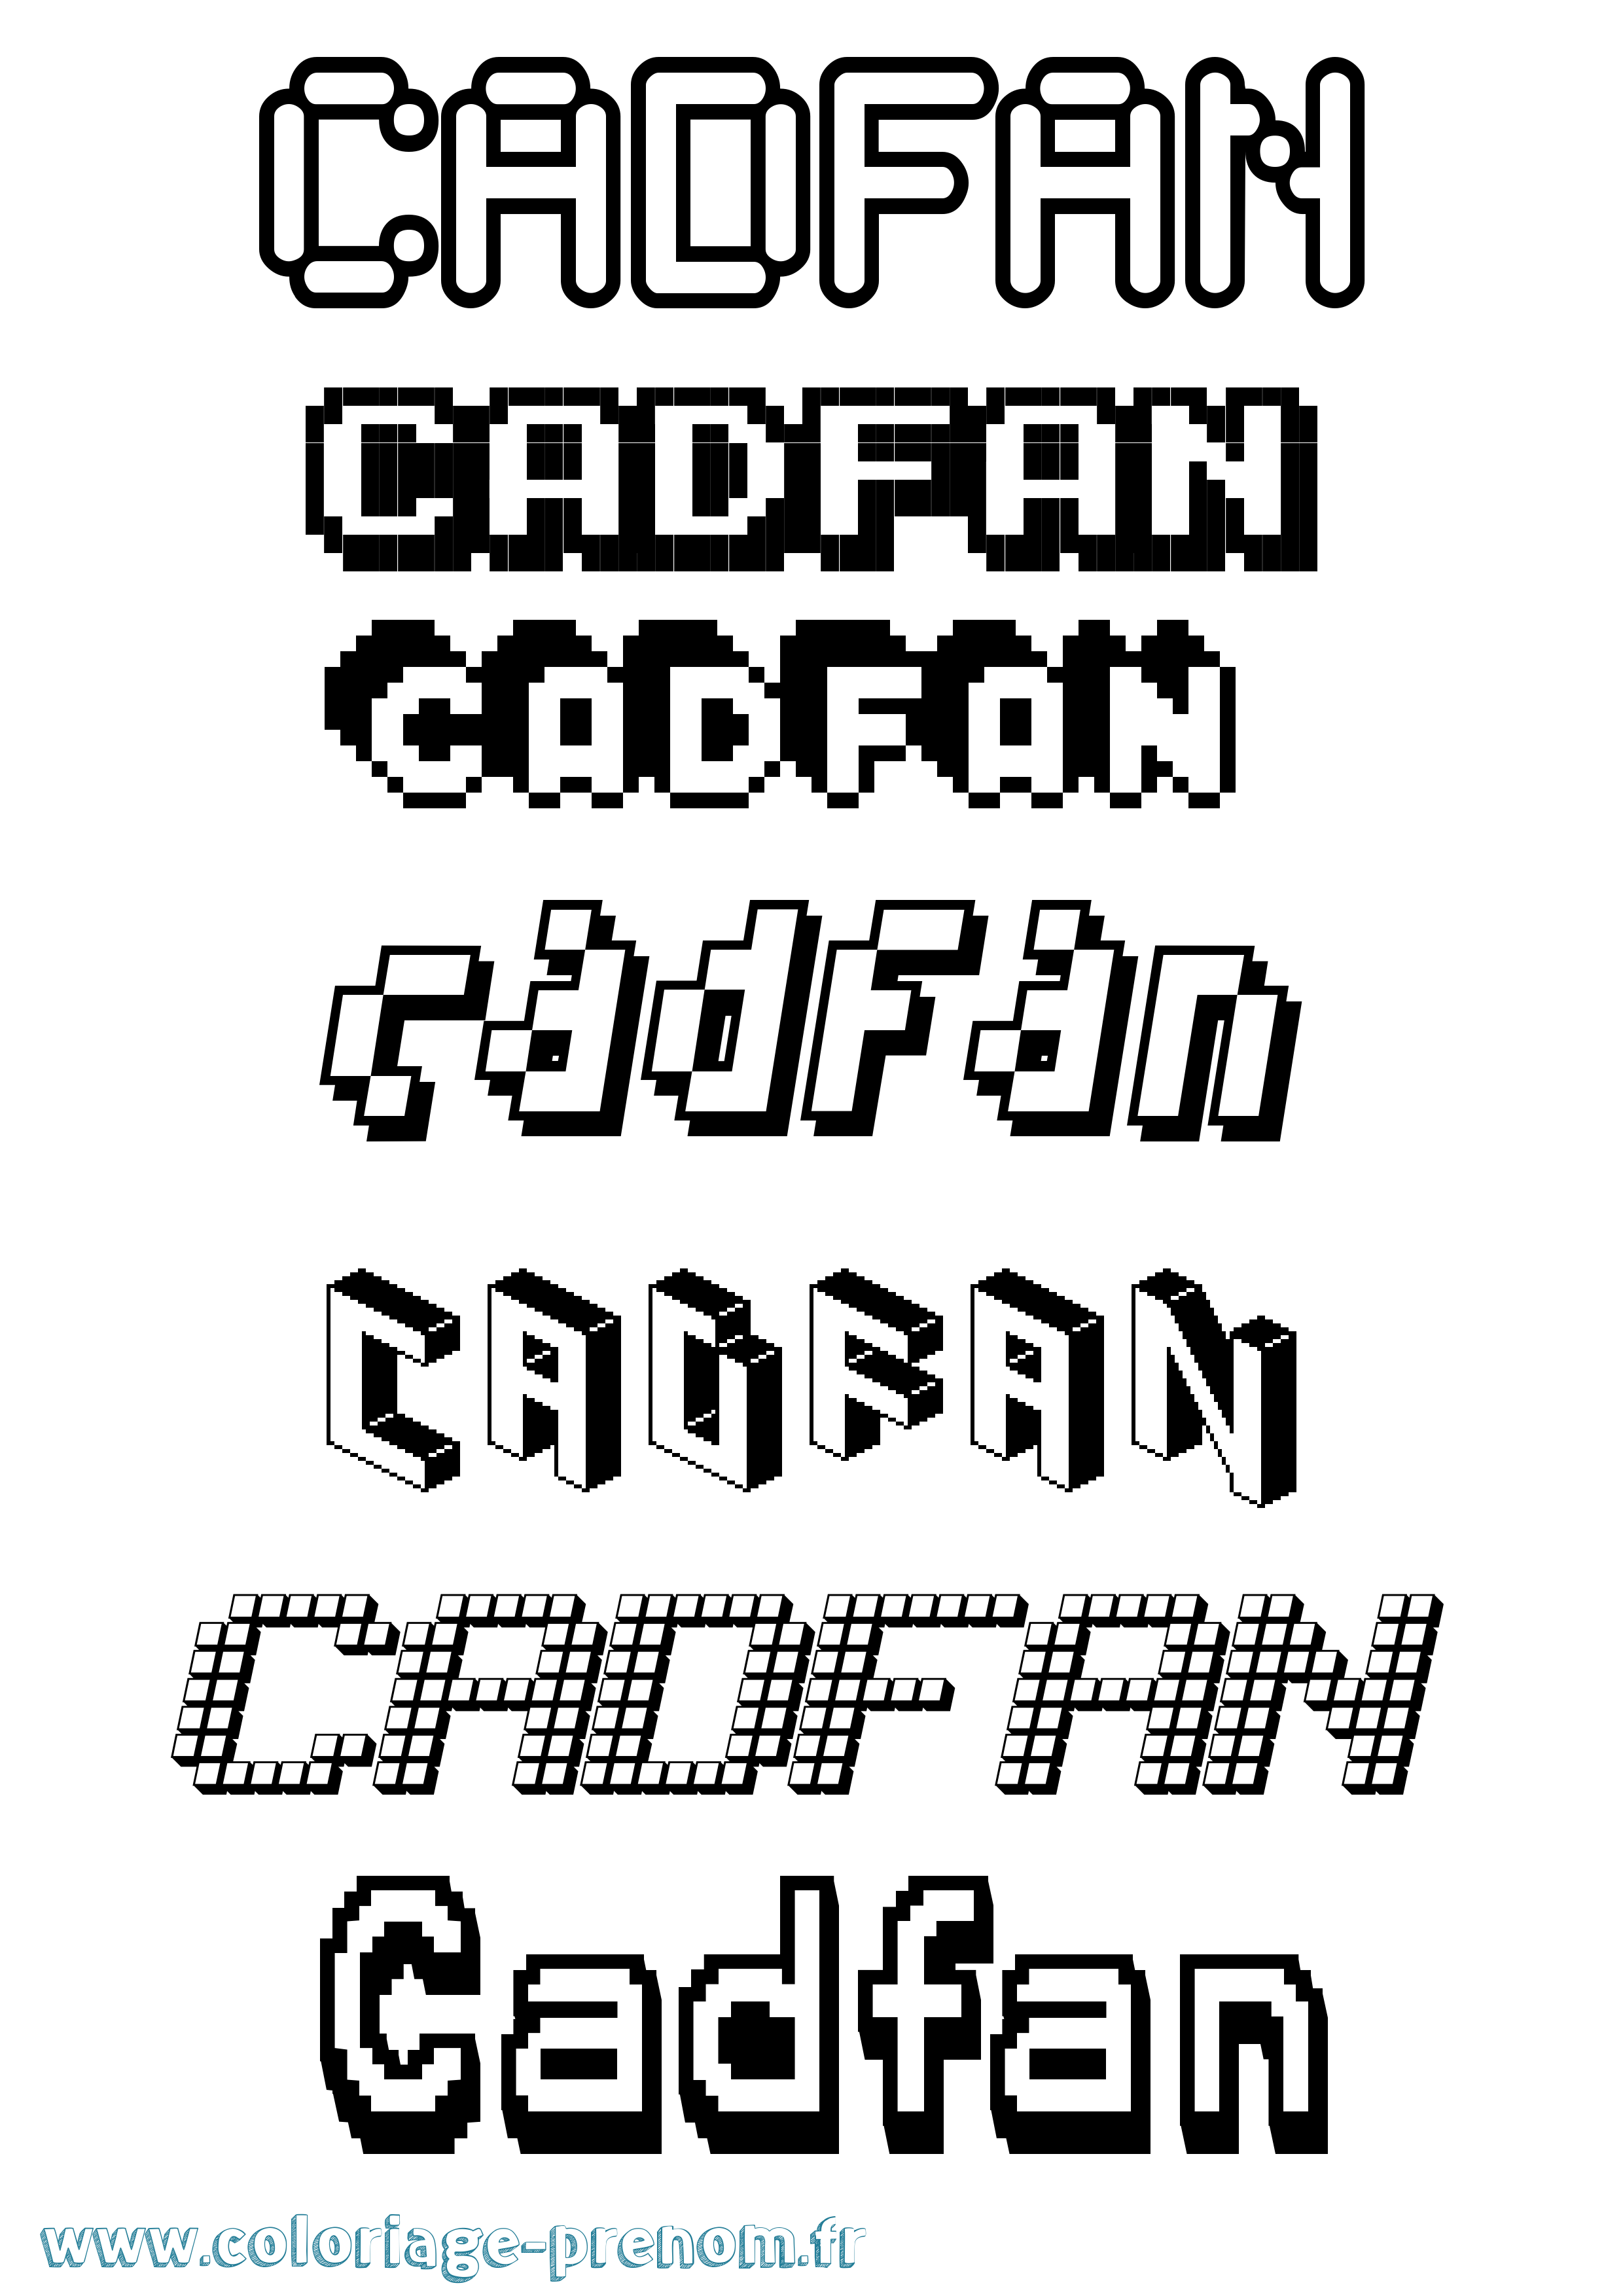 Coloriage prénom Cadfan Pixel